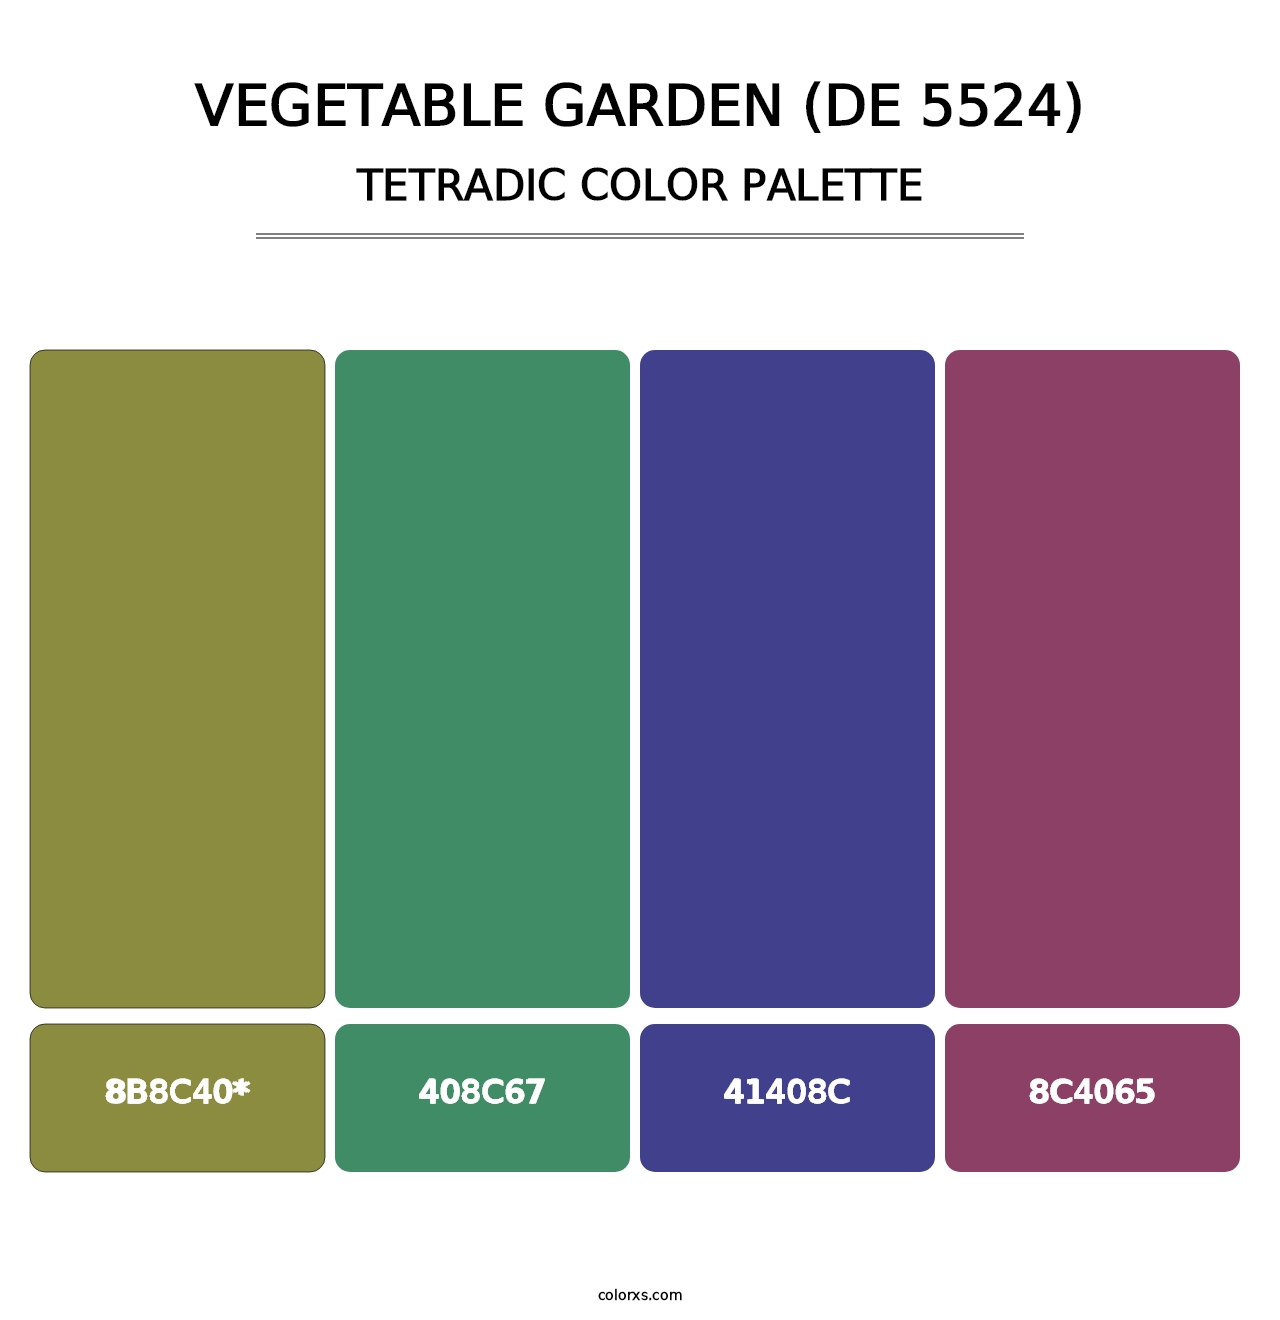 Vegetable Garden (DE 5524) - Tetradic Color Palette